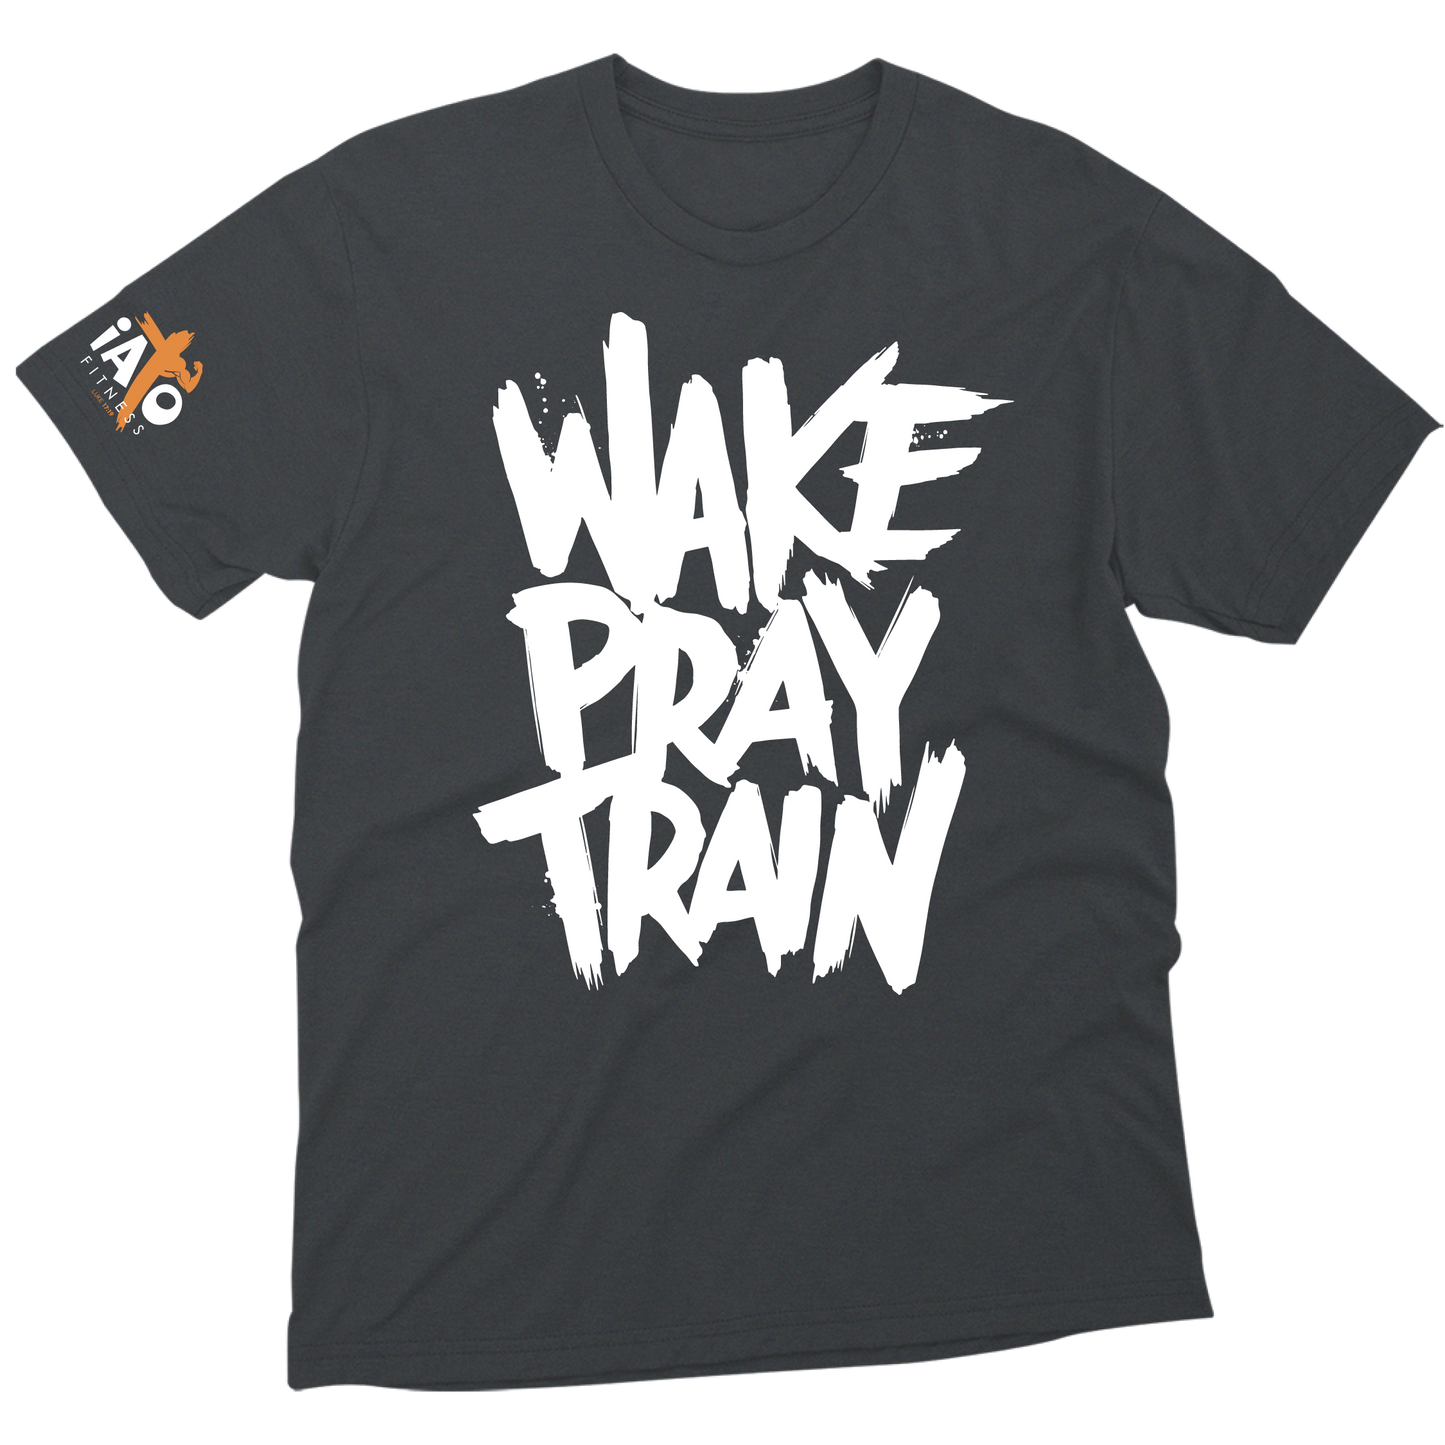 Wake Pray Train